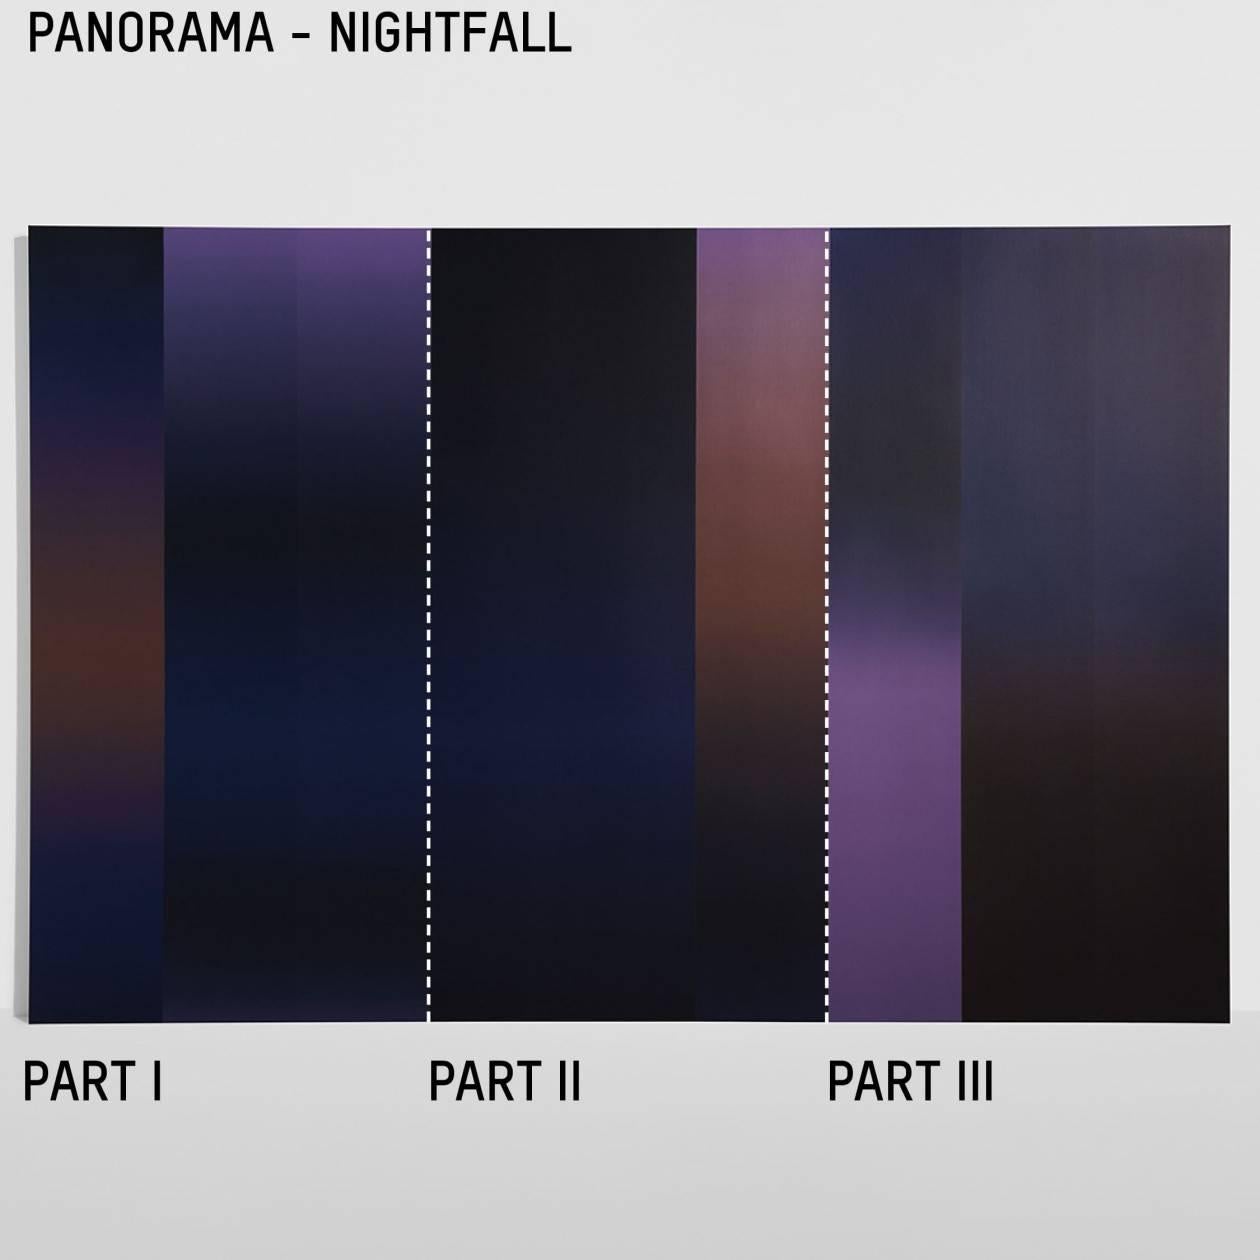 PETITE  FRITURE Panorama Wallpaper Ombré, Nightfall Part 2 by Carole Baijings 2